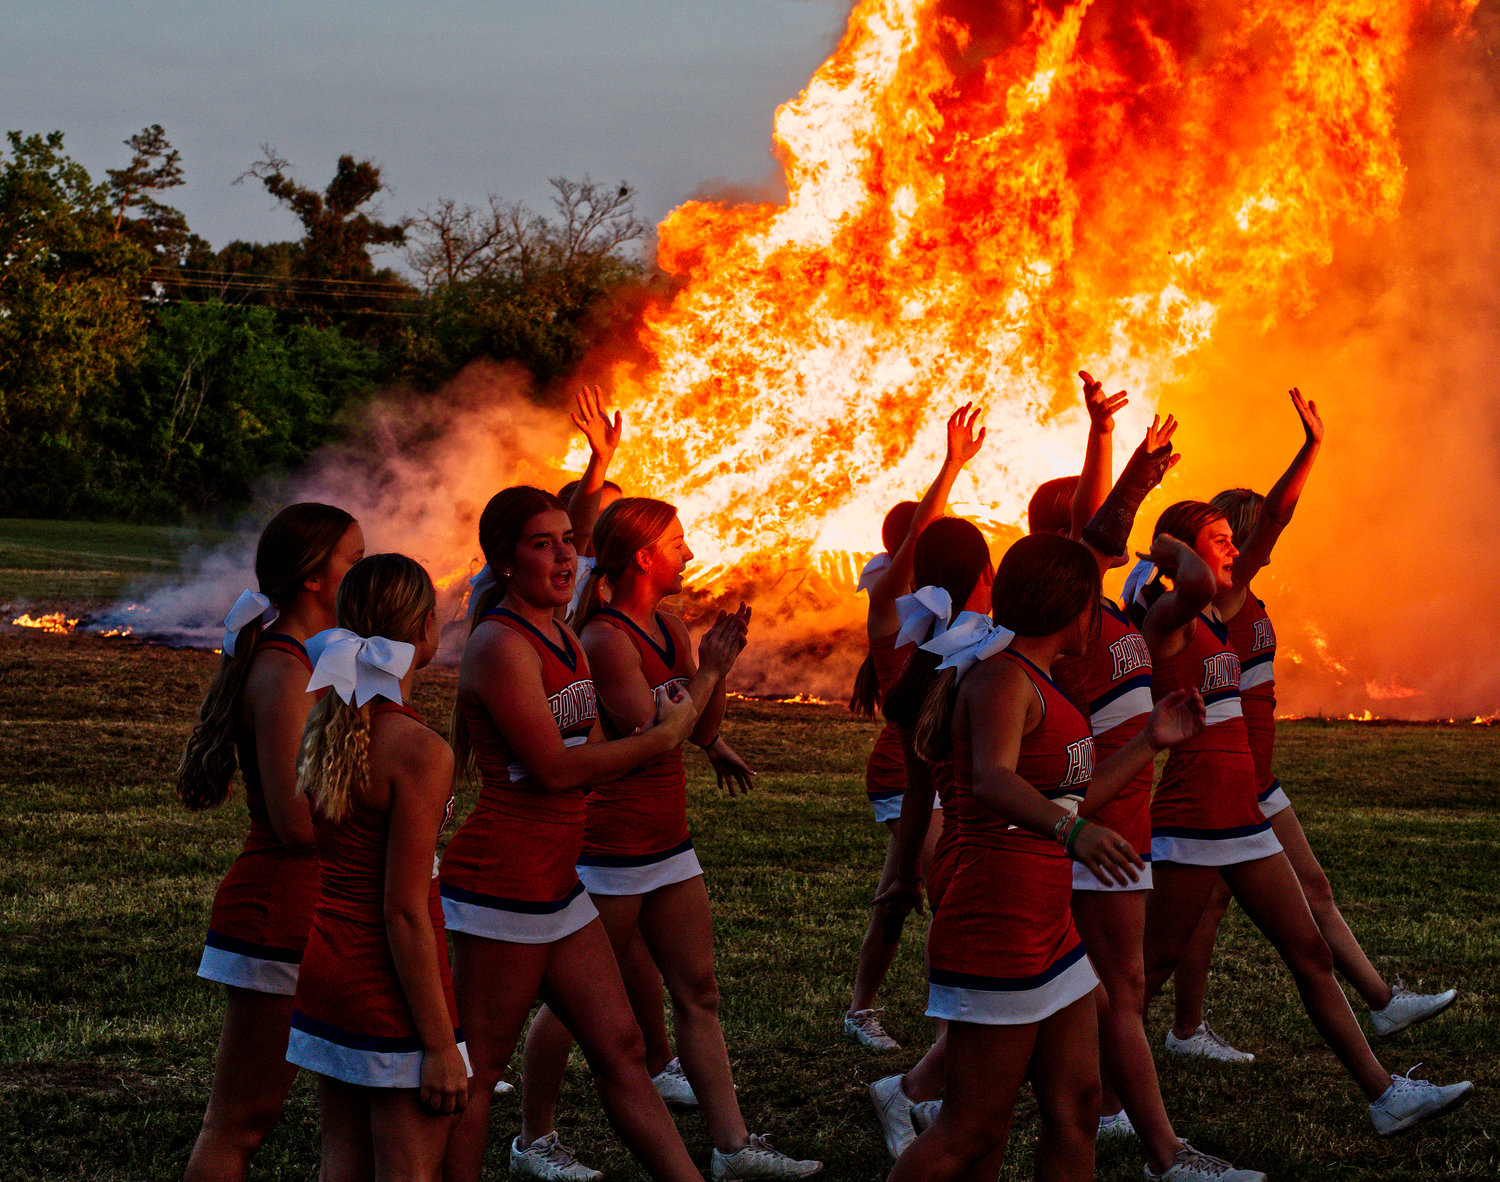 Alba-Golden High School cheerleaders pep up the crowd at the homecoming bonfire held last Wednesday night near the school.